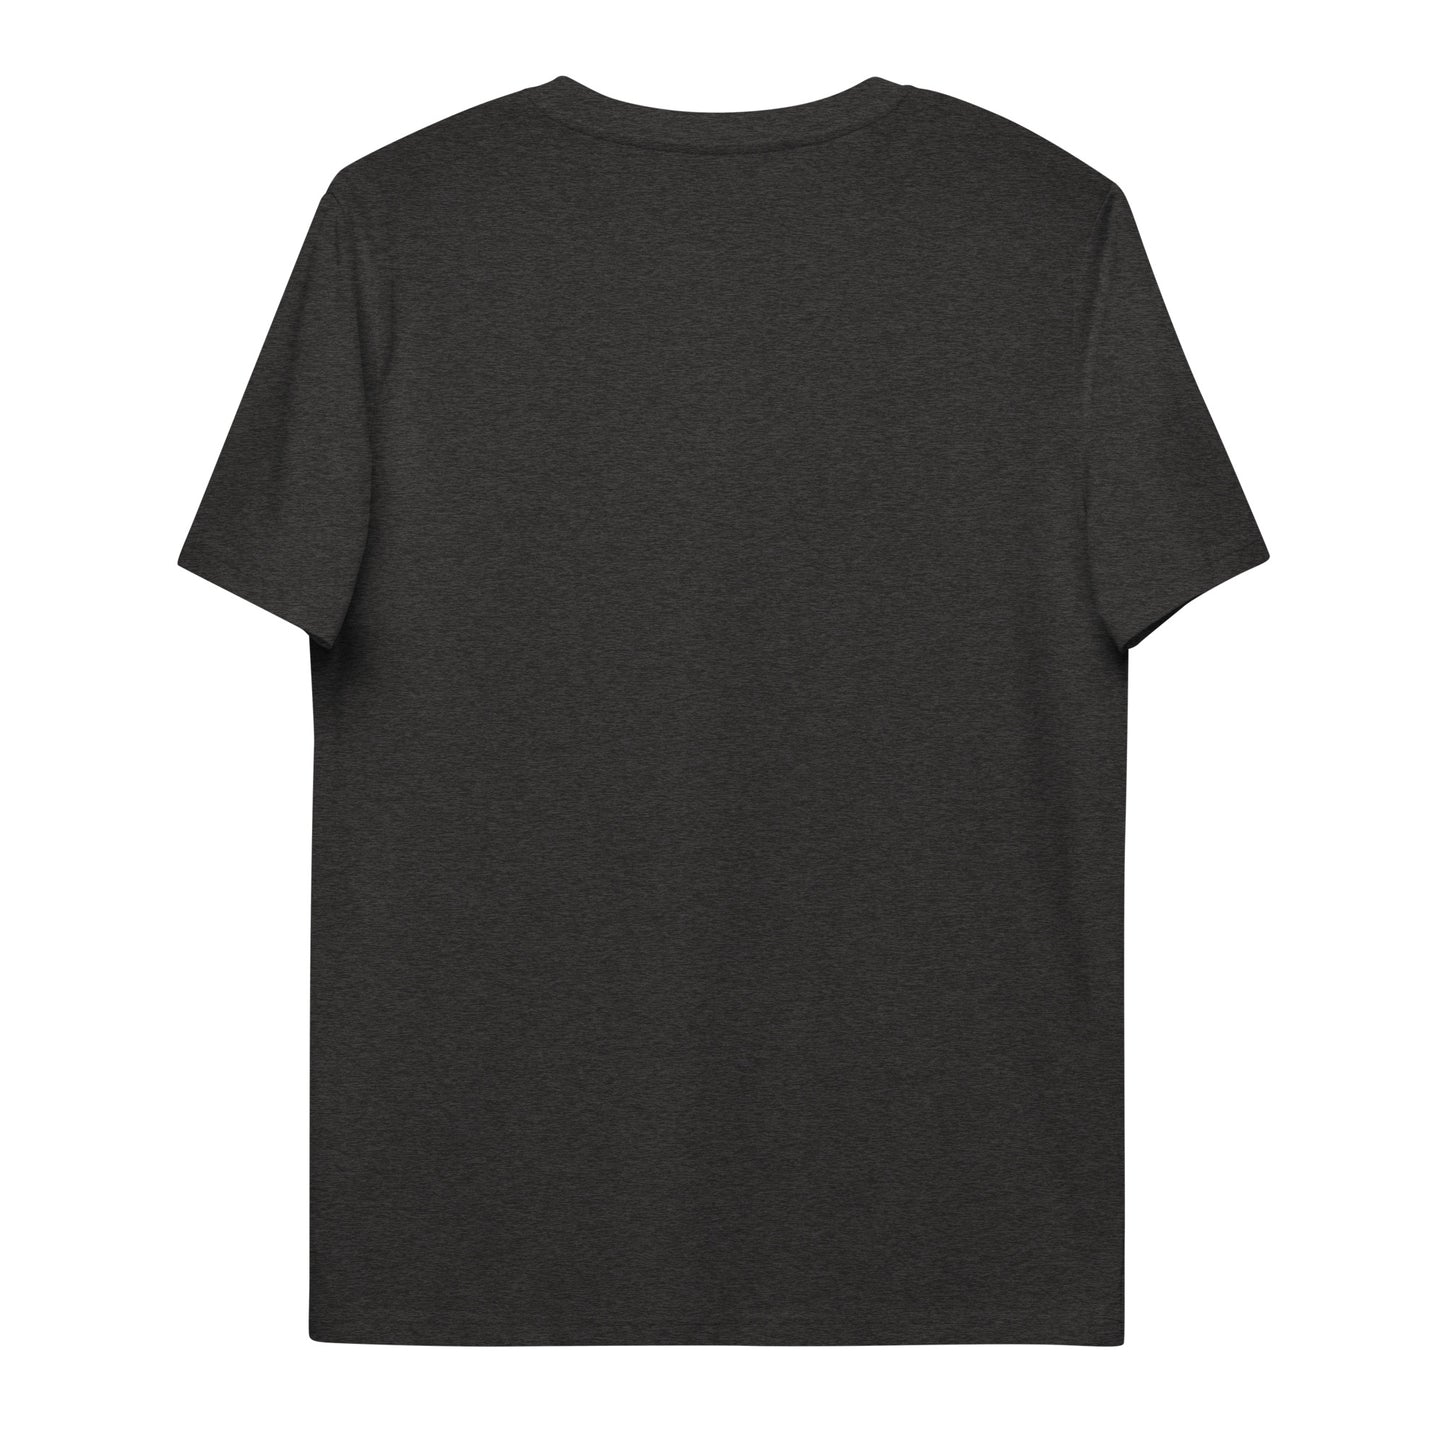 The Duke organic cotton t-shirt (unisex | embroidered)